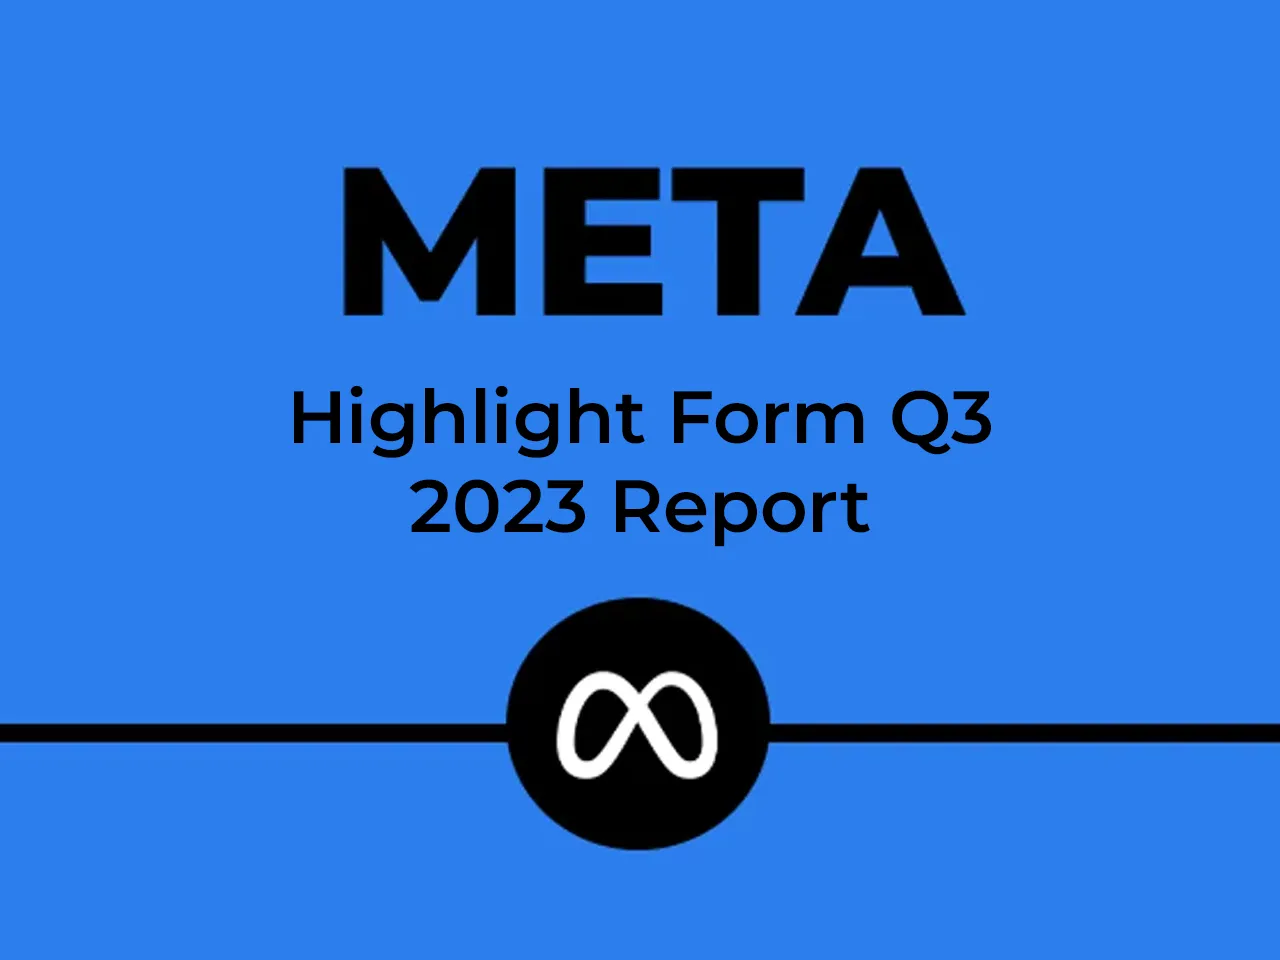 Meta reported a revenue of $34.15 billion in Q3 FY23